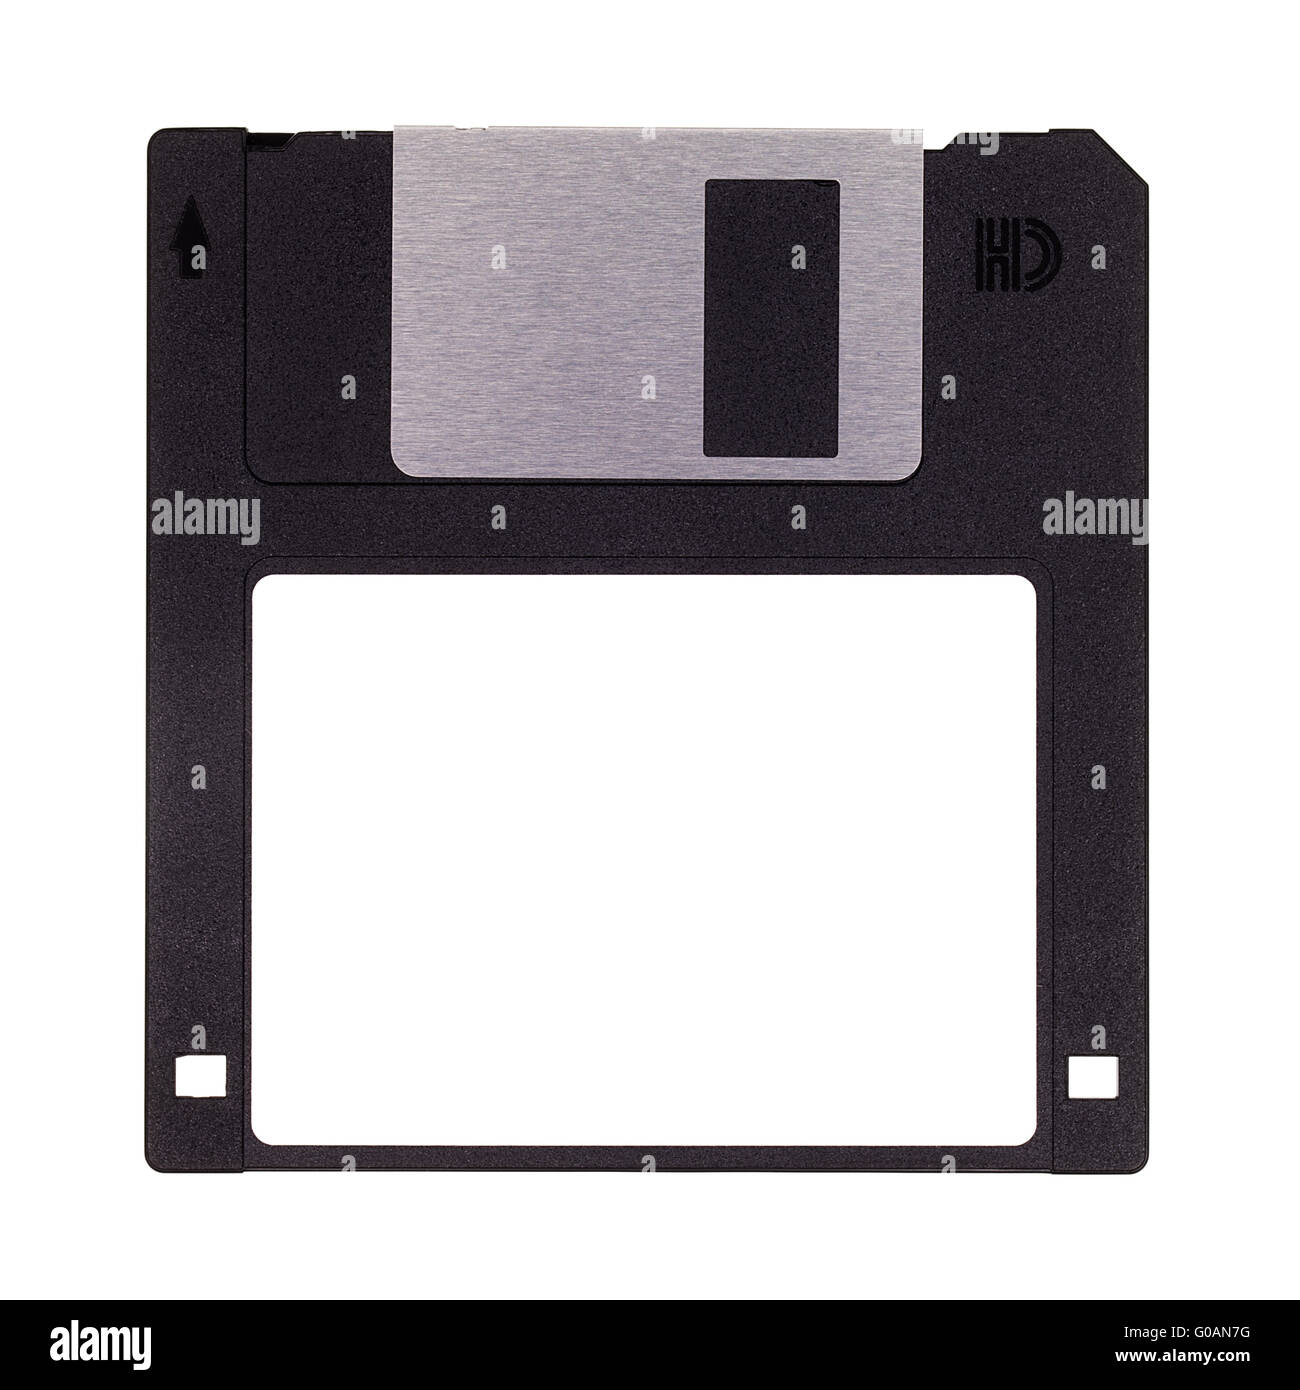 Floppy disk isolated on white Stock Photo